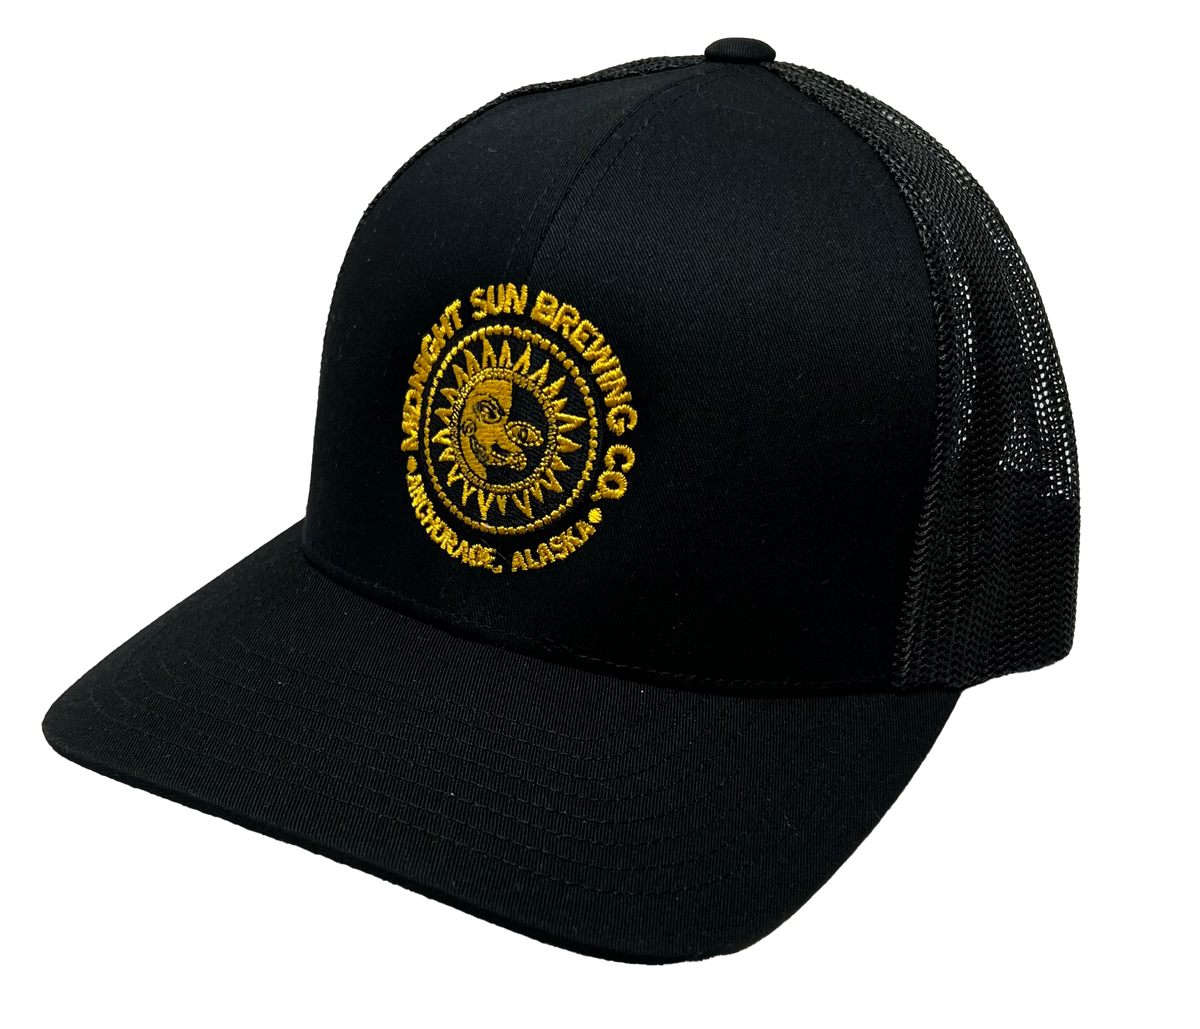 Classic Trucker Hat – Midnight Sun Brewing Company